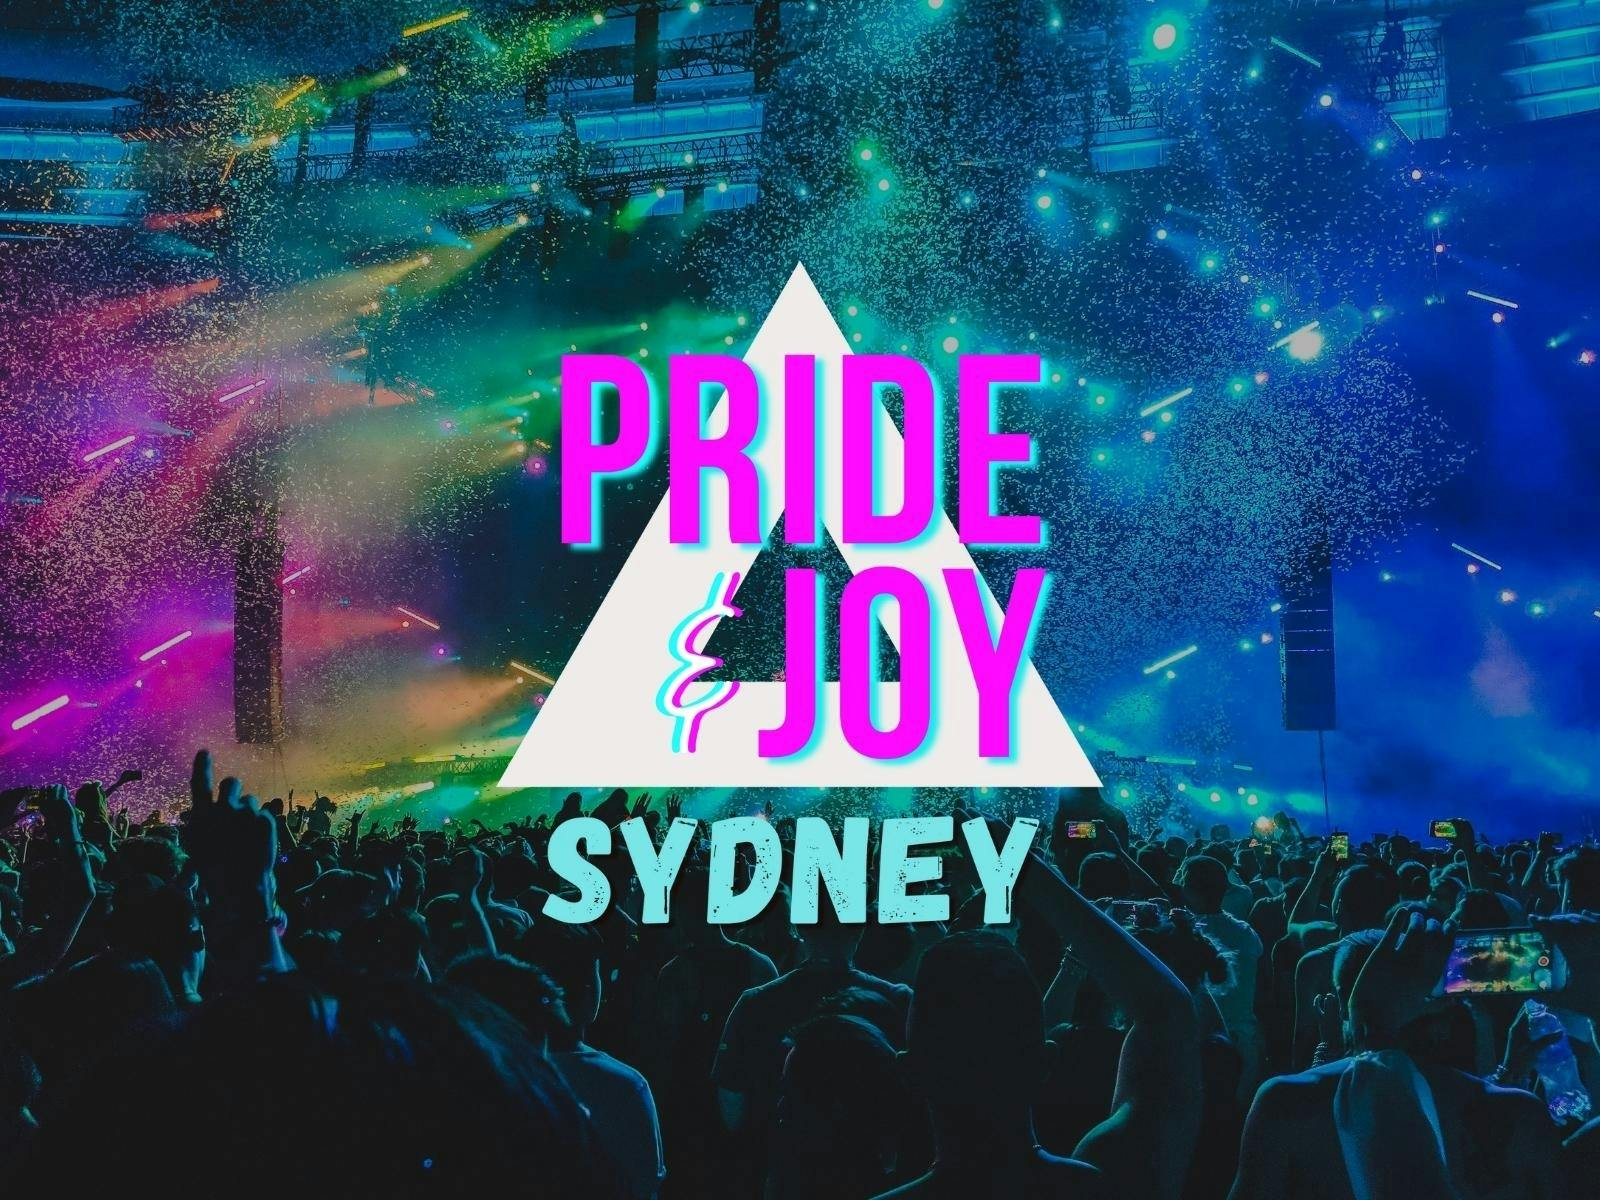 Pride & Joy Sydney Sydney, Australia Official Travel